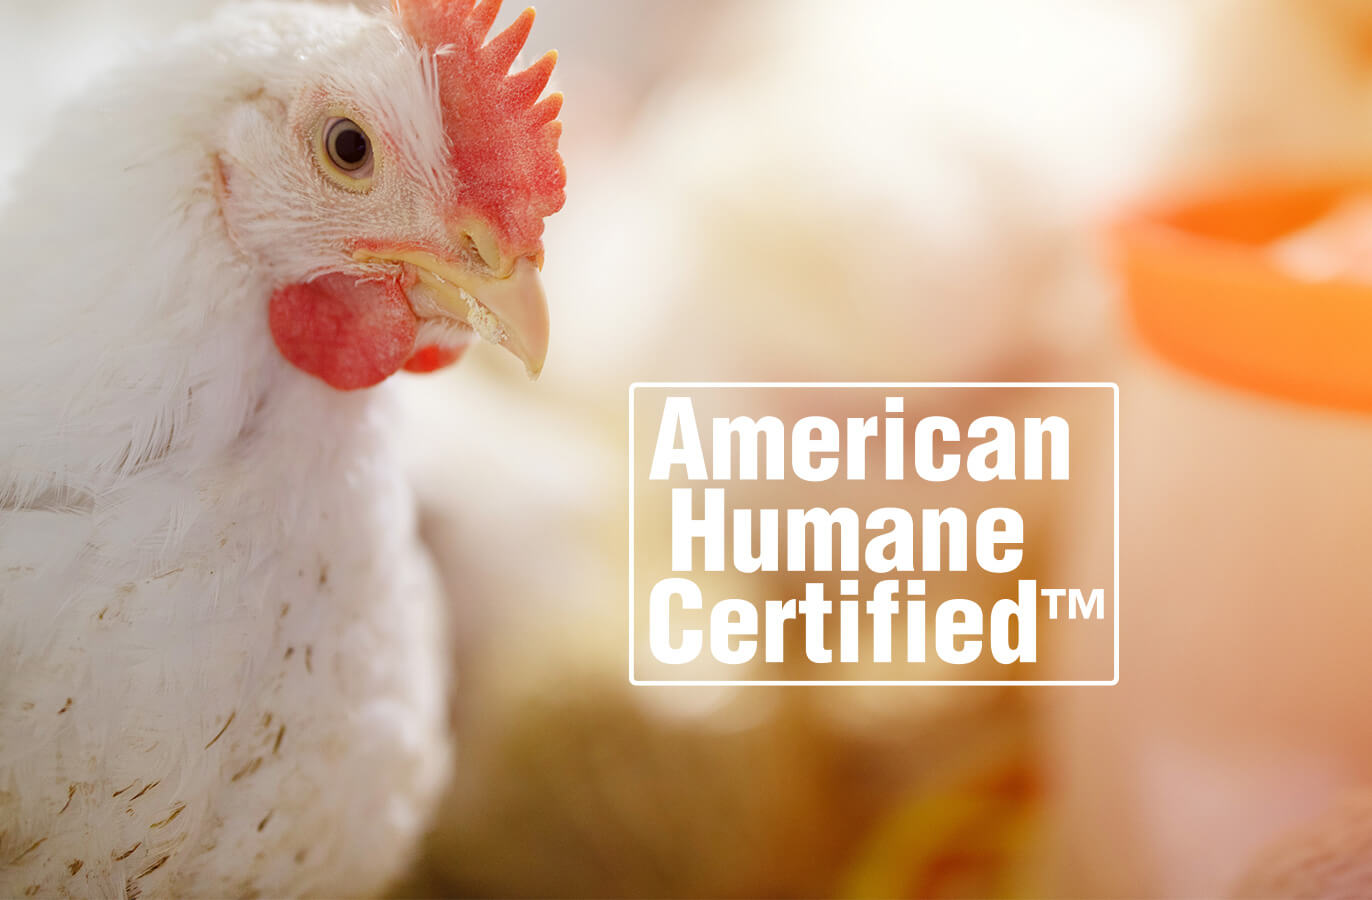 adult chicken shown. American Human Certified logo shown